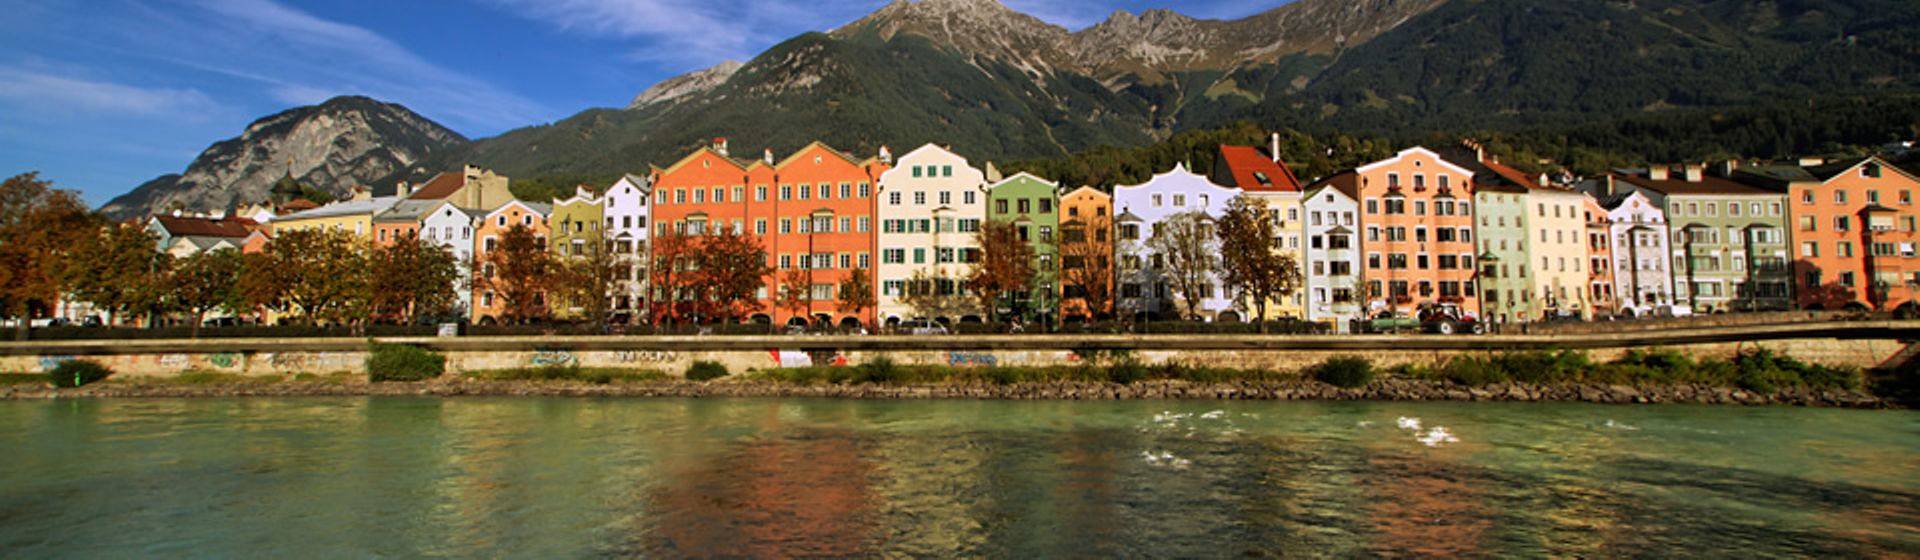 Holidays to Innsbruck Image